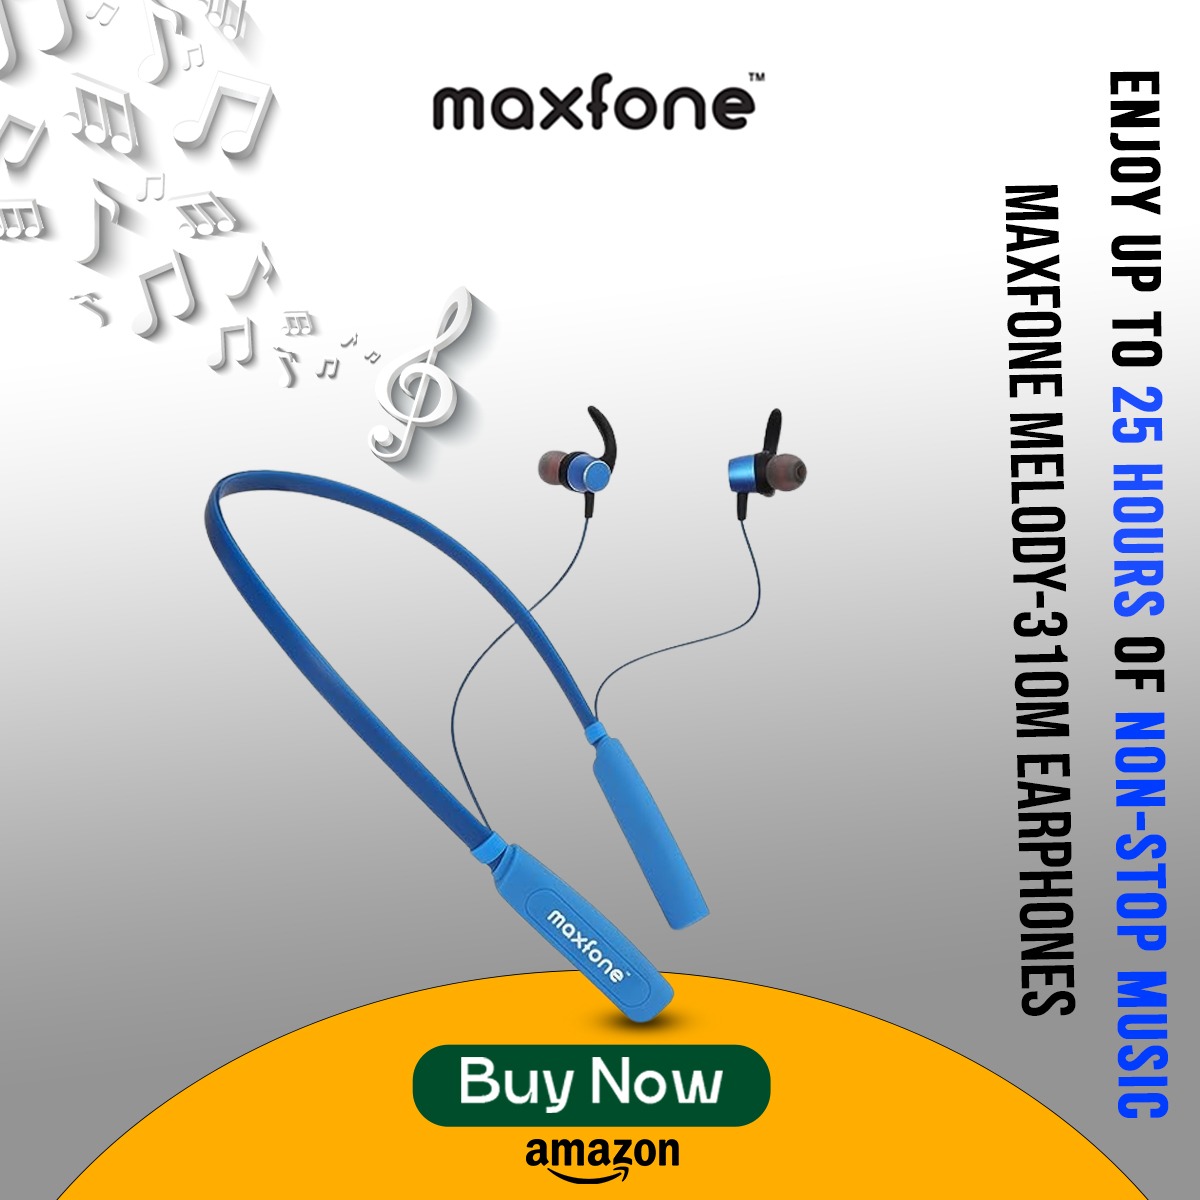 🤗𝐄𝐍𝐉𝐎𝐘 𝐔𝐏 𝐓𝐎 𝟐𝟓 𝐇𝐎𝐔𝐑𝐒 𝐎𝐅 𝐍𝐎𝐍-𝐒𝐓𝐎𝐏 𝐌𝐔𝐒𝐈𝐂🤗
🎧𝐌𝐀𝐗𝐅𝐎𝐍𝐄 𝐌𝐄𝐋𝐎𝐃𝐘-𝟑𝟏𝟎𝐌 𝐄𝐀𝐑𝐏𝐇𝐎𝐍𝐄𝐒🎧

Buy Now🤩👇
📞- 011-47302201
🌐- maxfone.in
Amazon: shorturl.at/chpuz

#maxfone #Wirelessneckband #bluetoothneckband